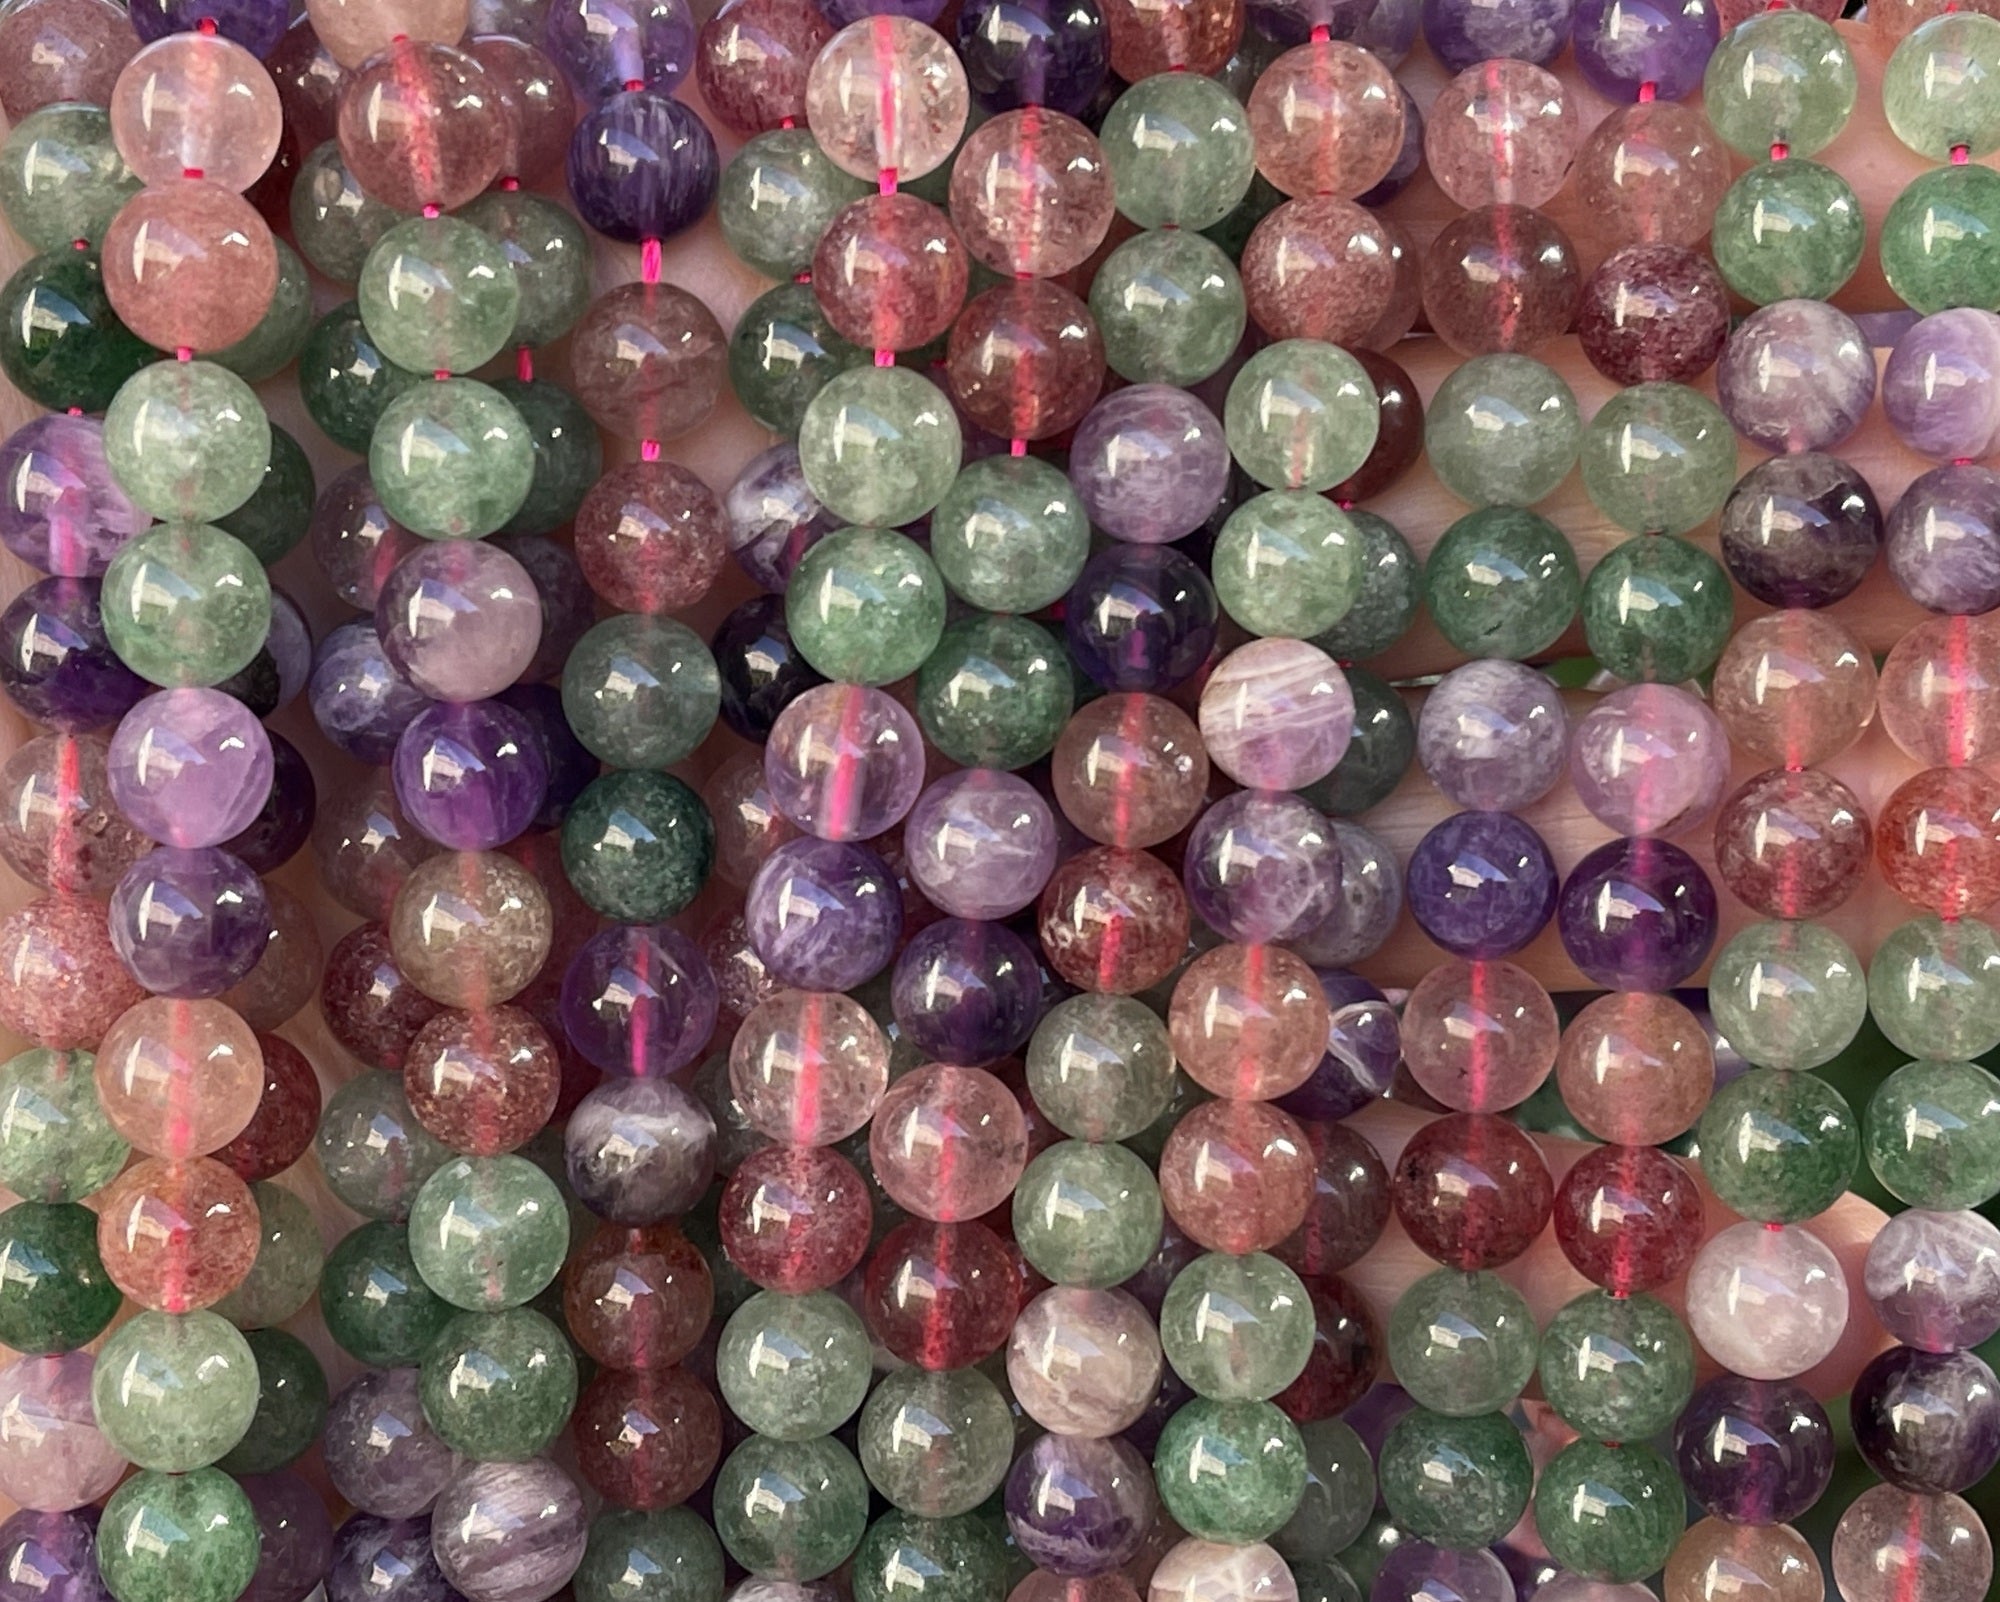 Strawberry Quartz Amethyst mix 8mm round beads 15.5" strand